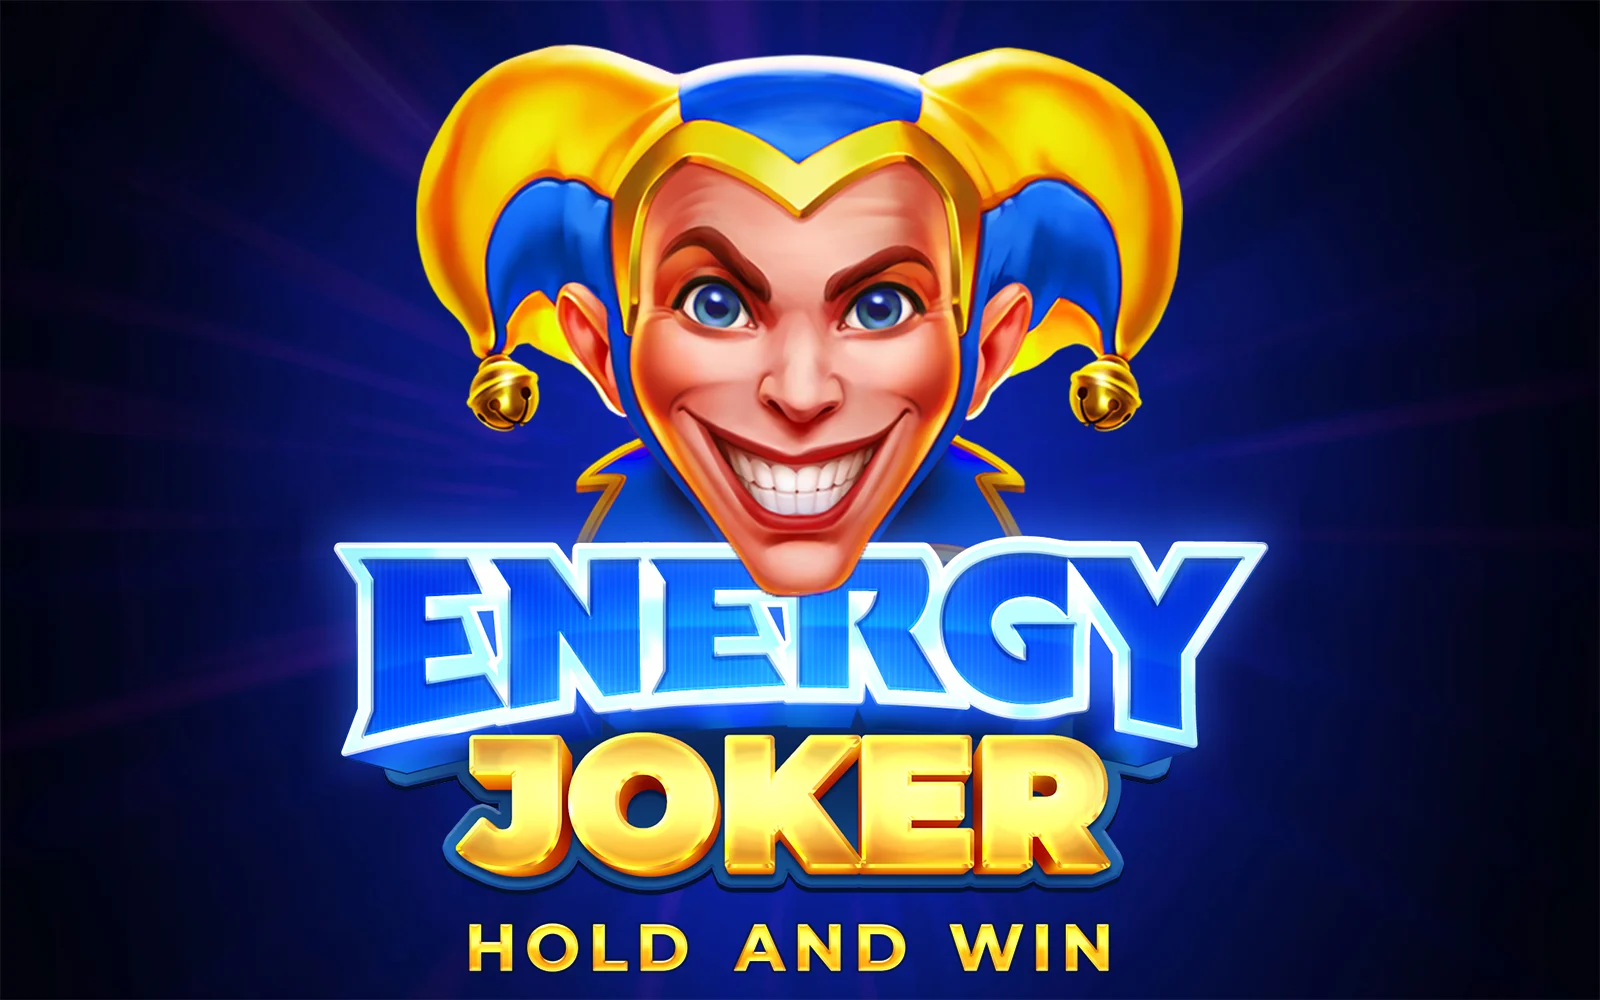 Play Energy Joker: Hold and Win on Starcasino.be online casino